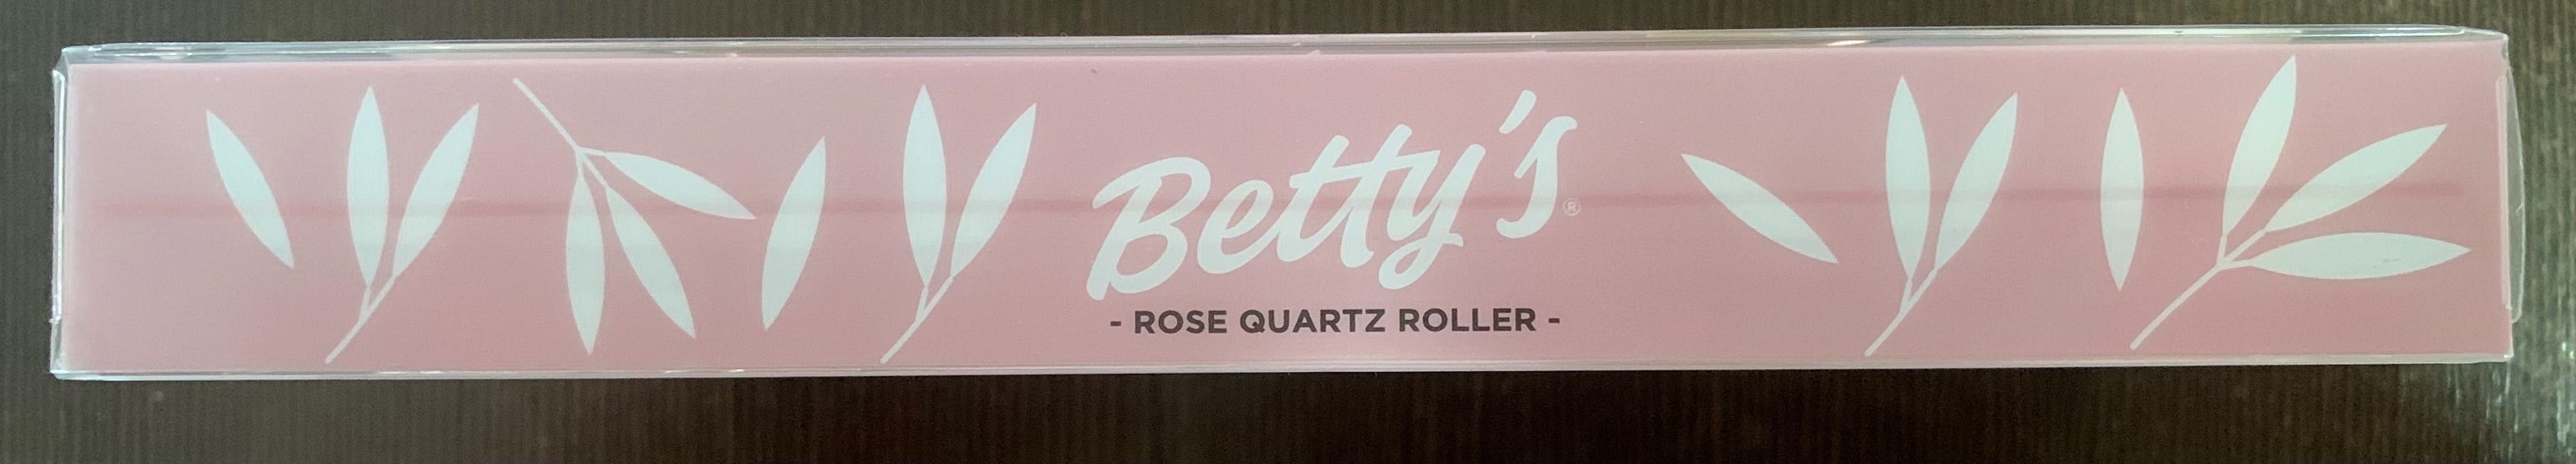 Betty’s rose quartz roller ролик роллер массажёр для лица кварц